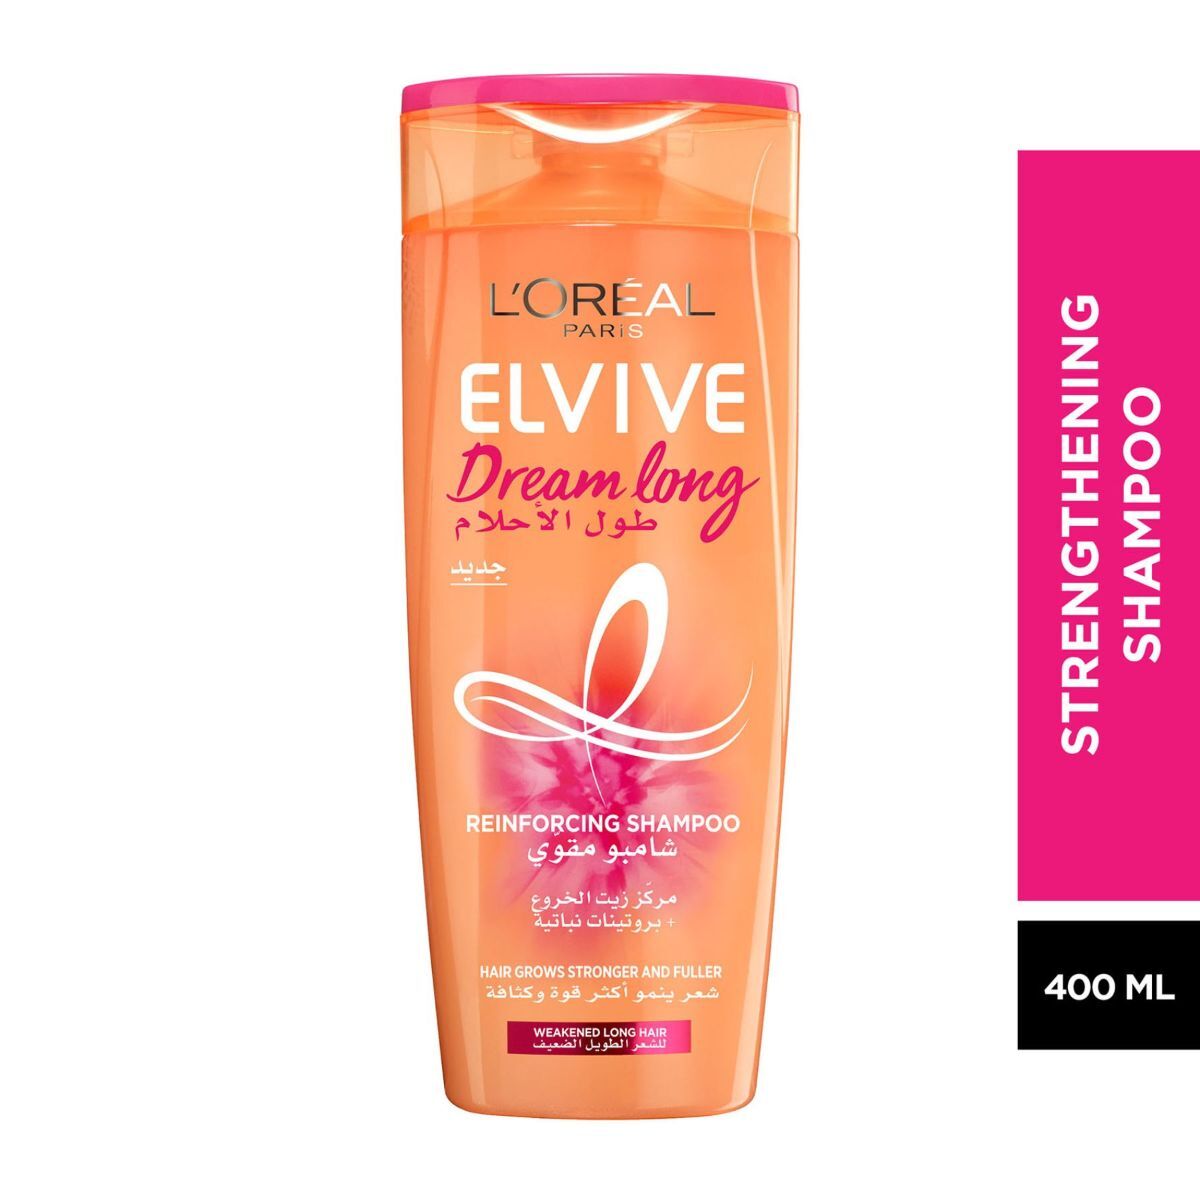 L'Oreal Elvive Dream Long Reinforcing Shampoo 400 ml